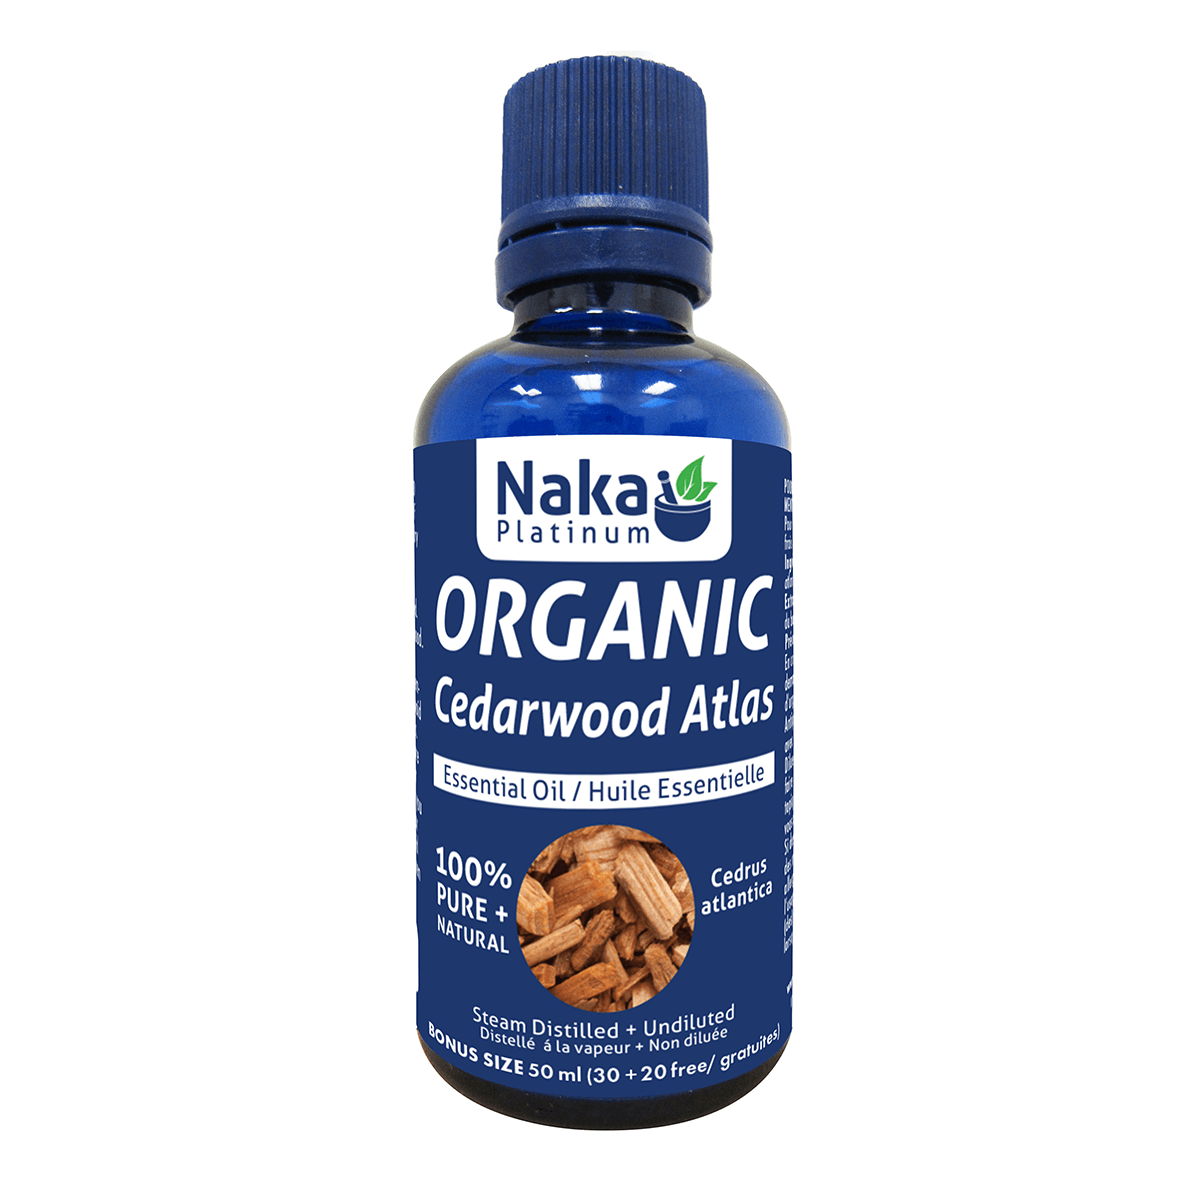 Naka Platinum Organic Cedarwood Oil 50mL Essential Oils at Village Vitamin Store